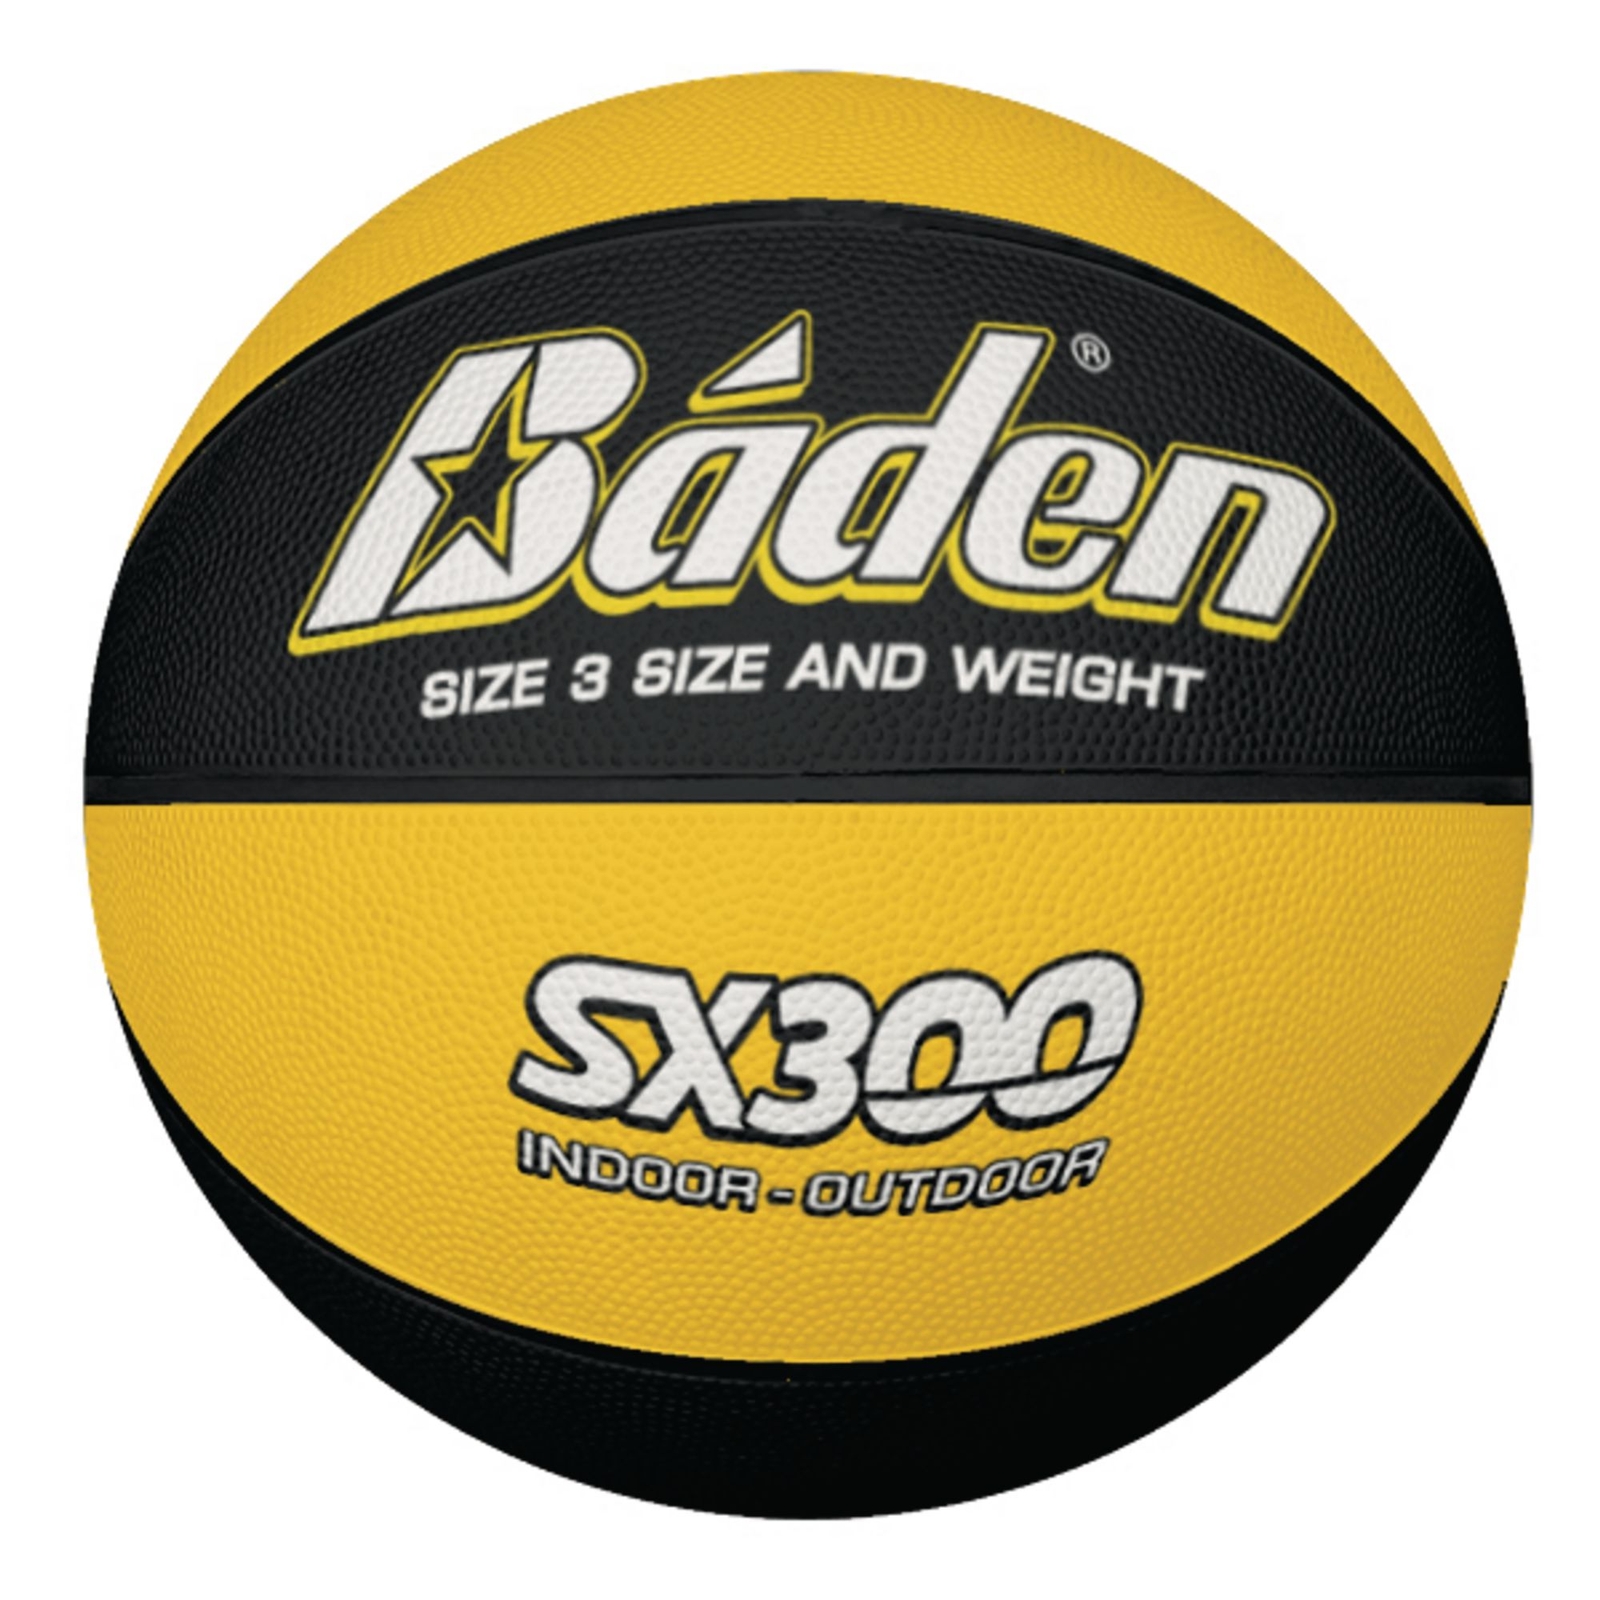 Baden SX300 Basketball - Size 3 - Yellow/Black